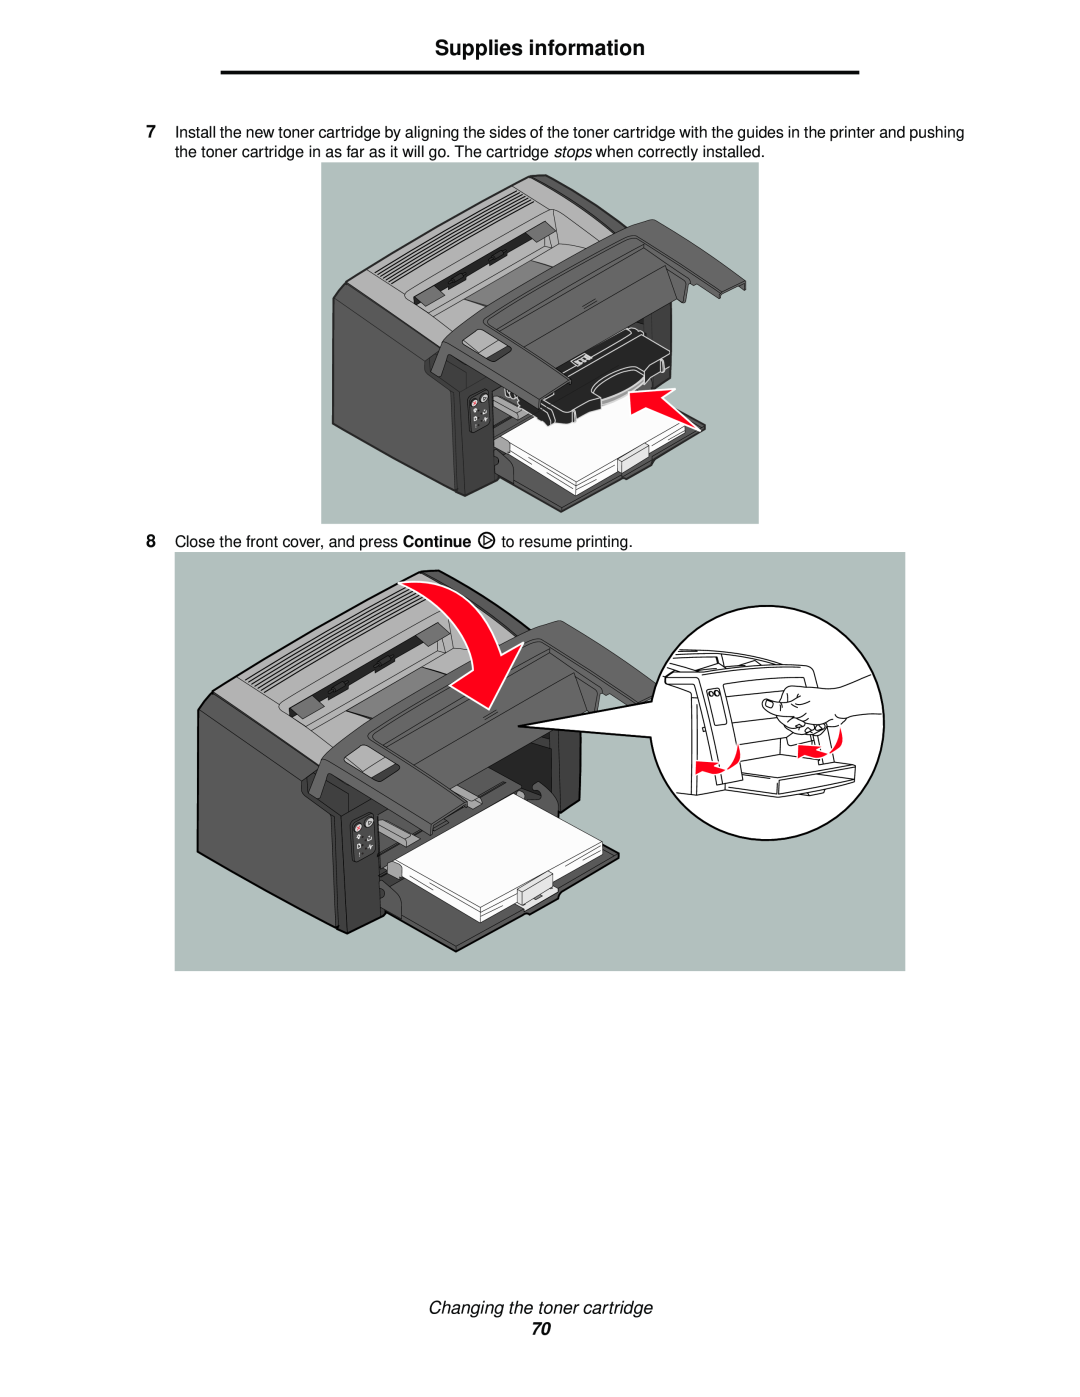 Lexmark 120 manual Supplies information, Changing the toner cartridge 